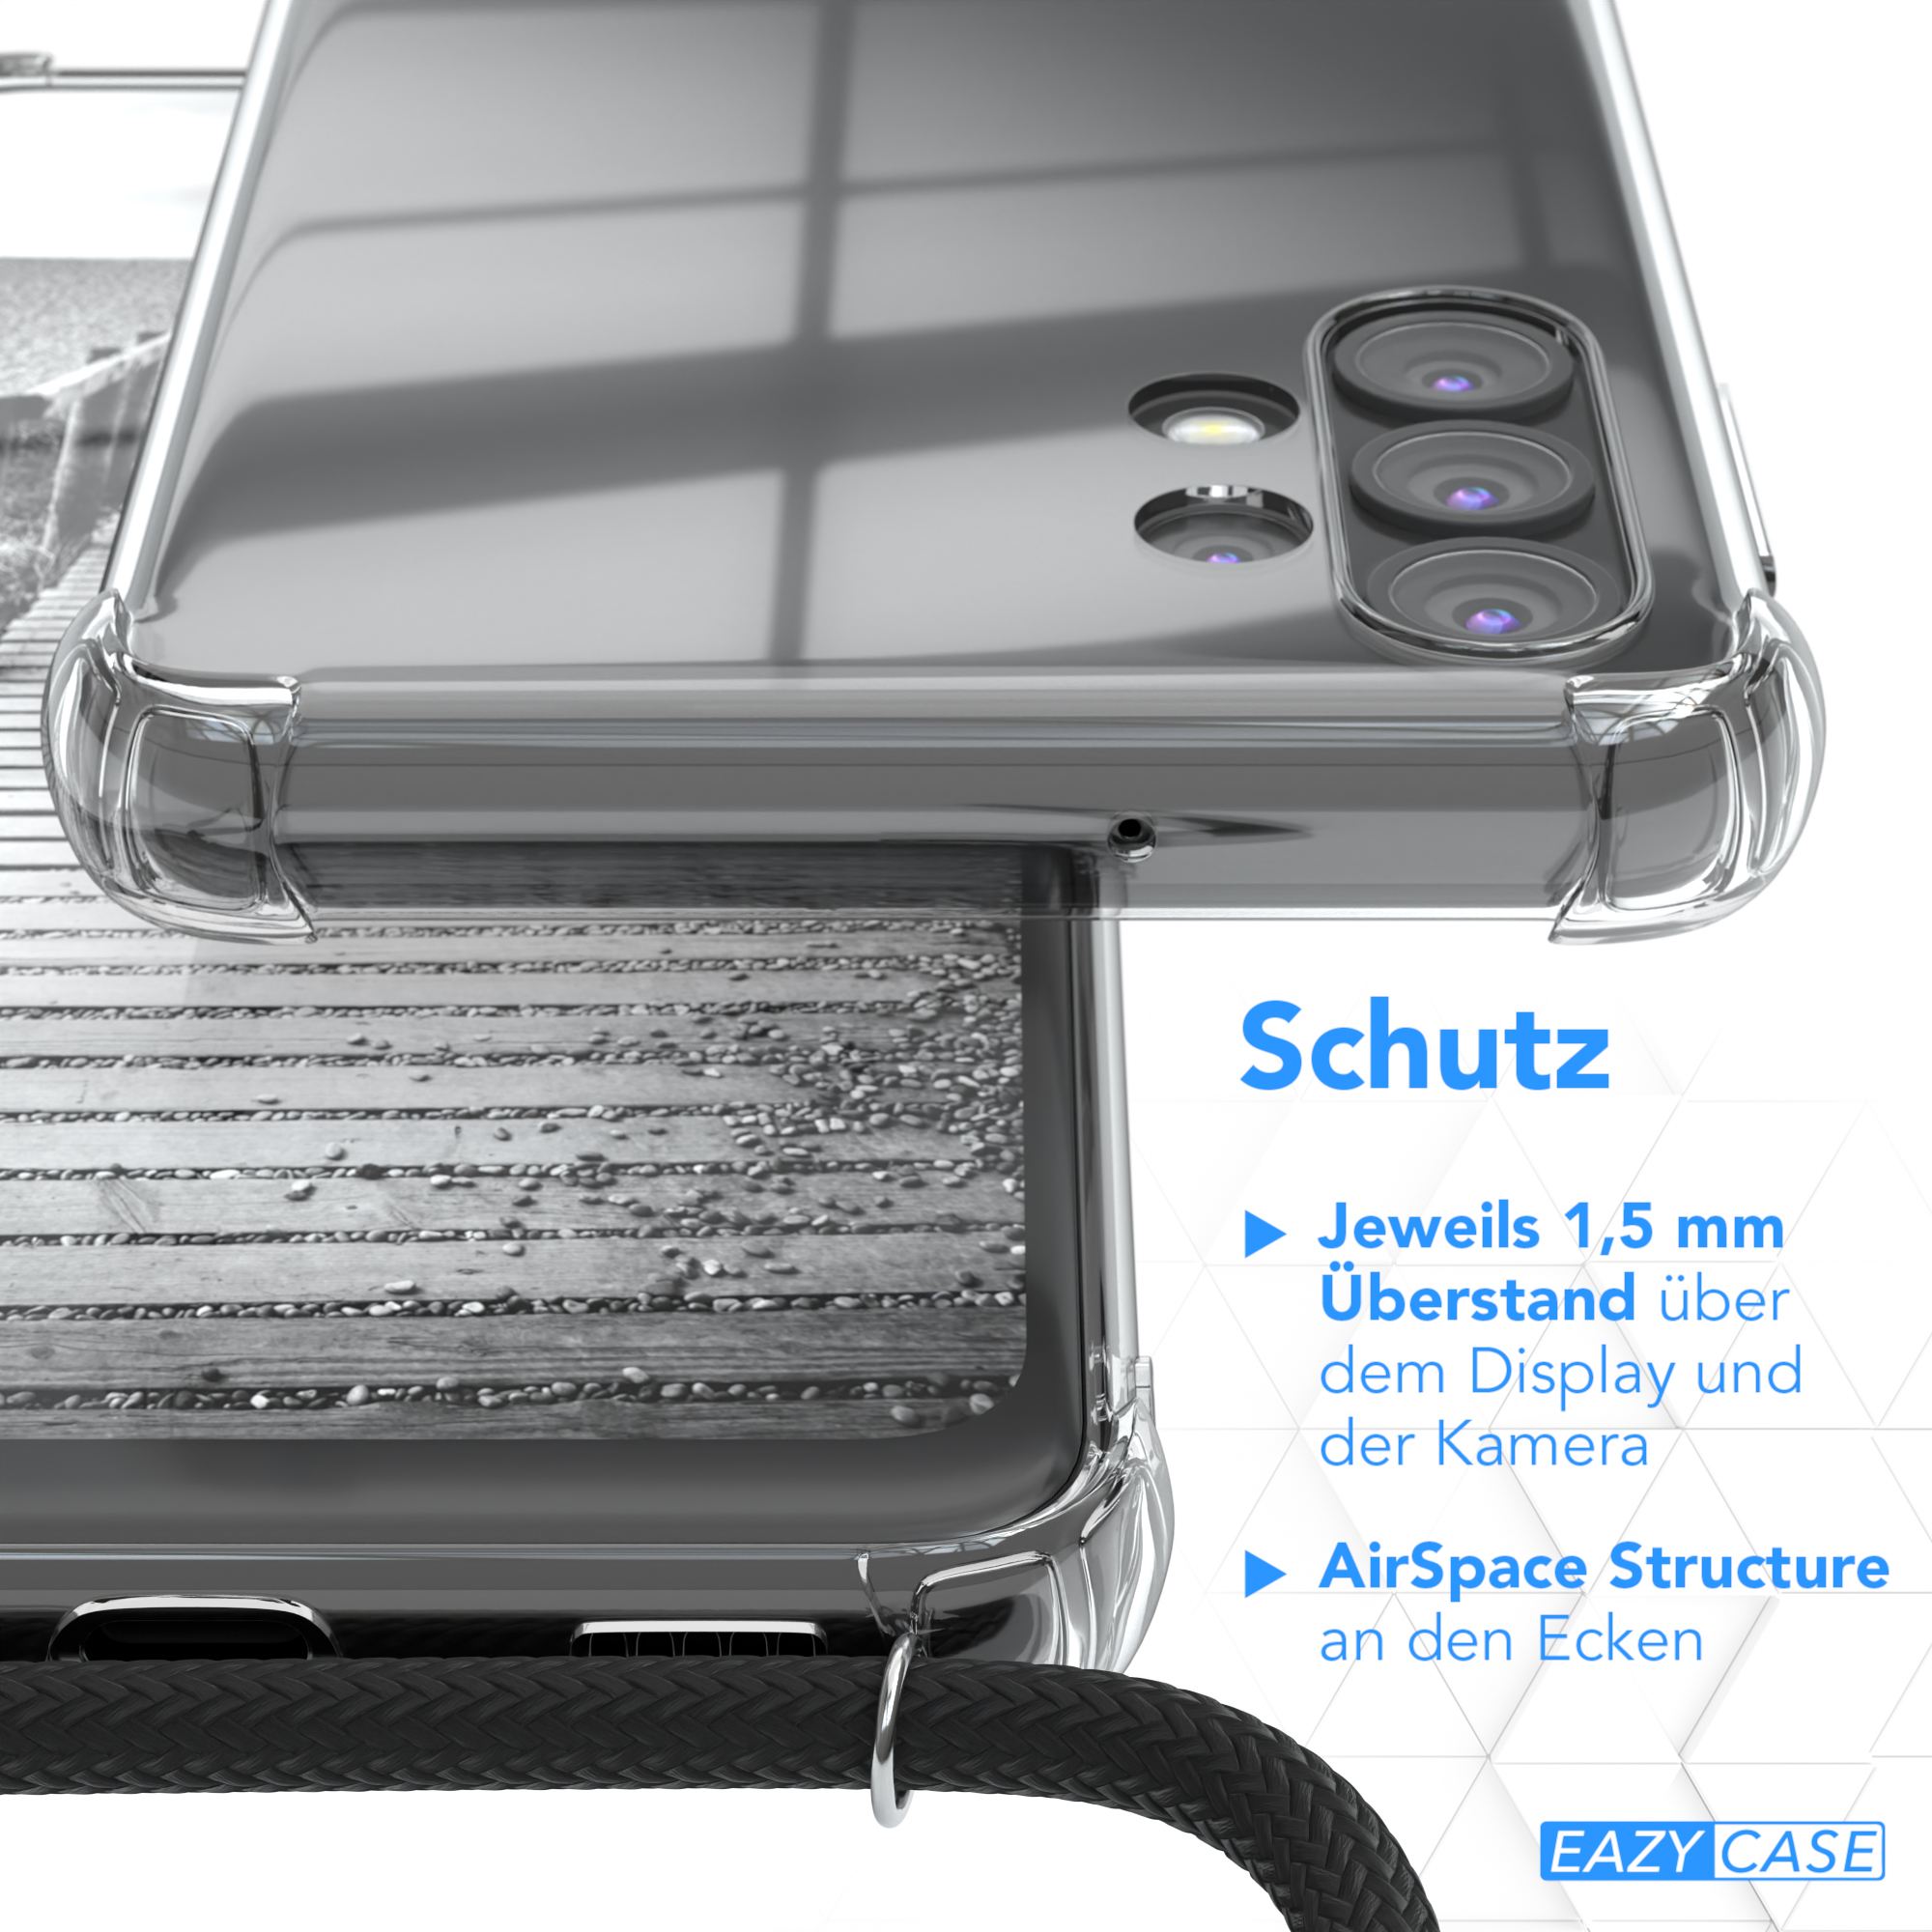 Kordel 5G, Galaxy A32 Metall CASE Umhängetasche, EAZY + extra Gold Samsung, Schwarz, Handykette